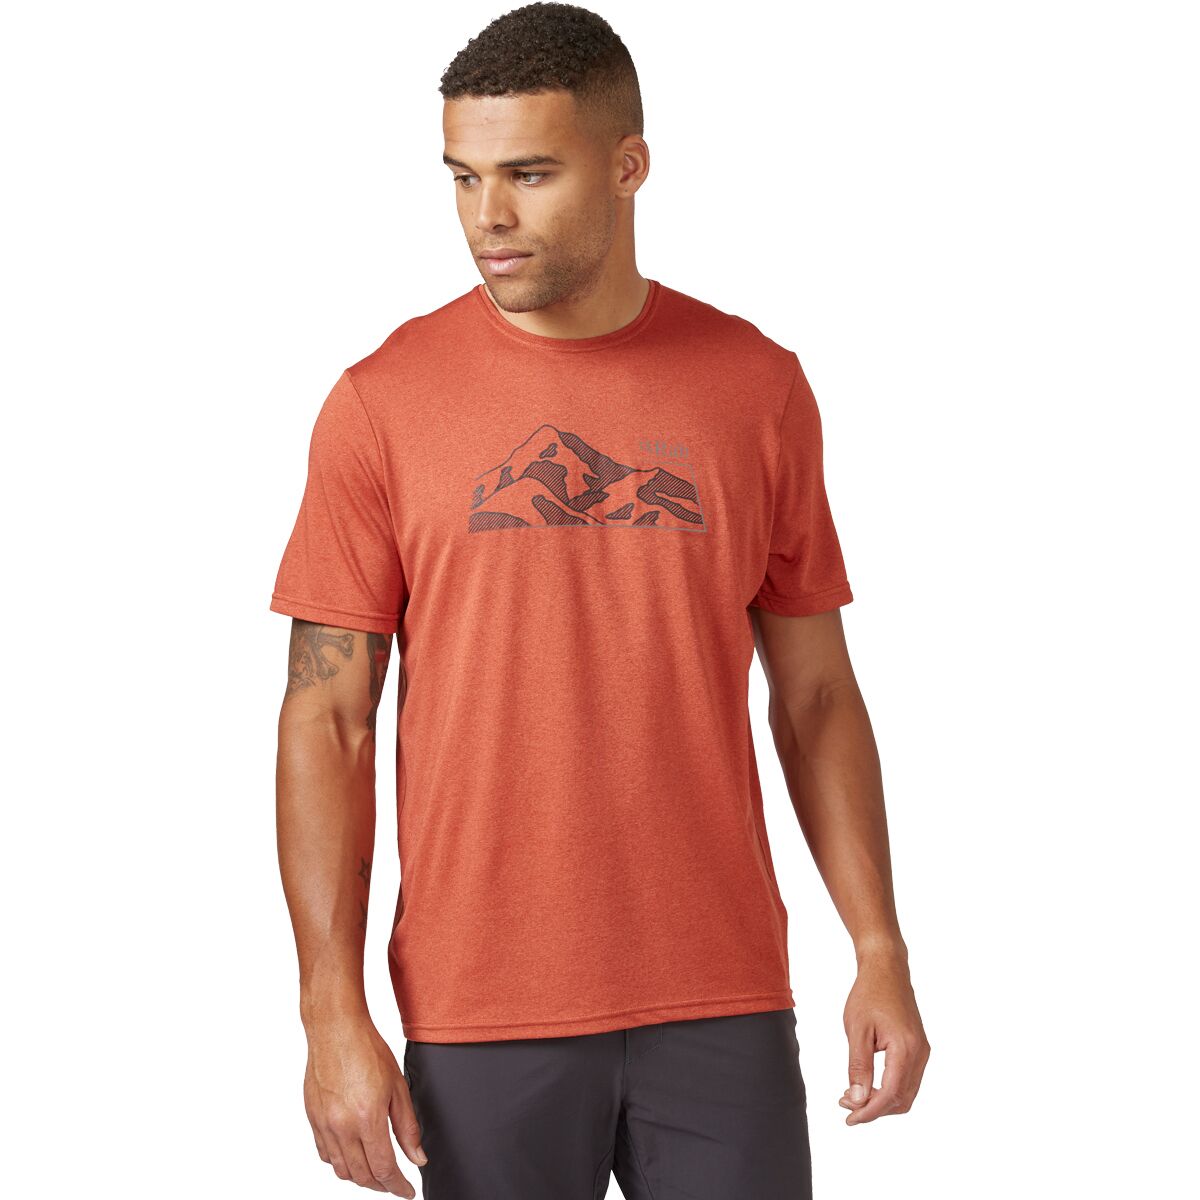 Mantle Mountain T-Shirt - Men